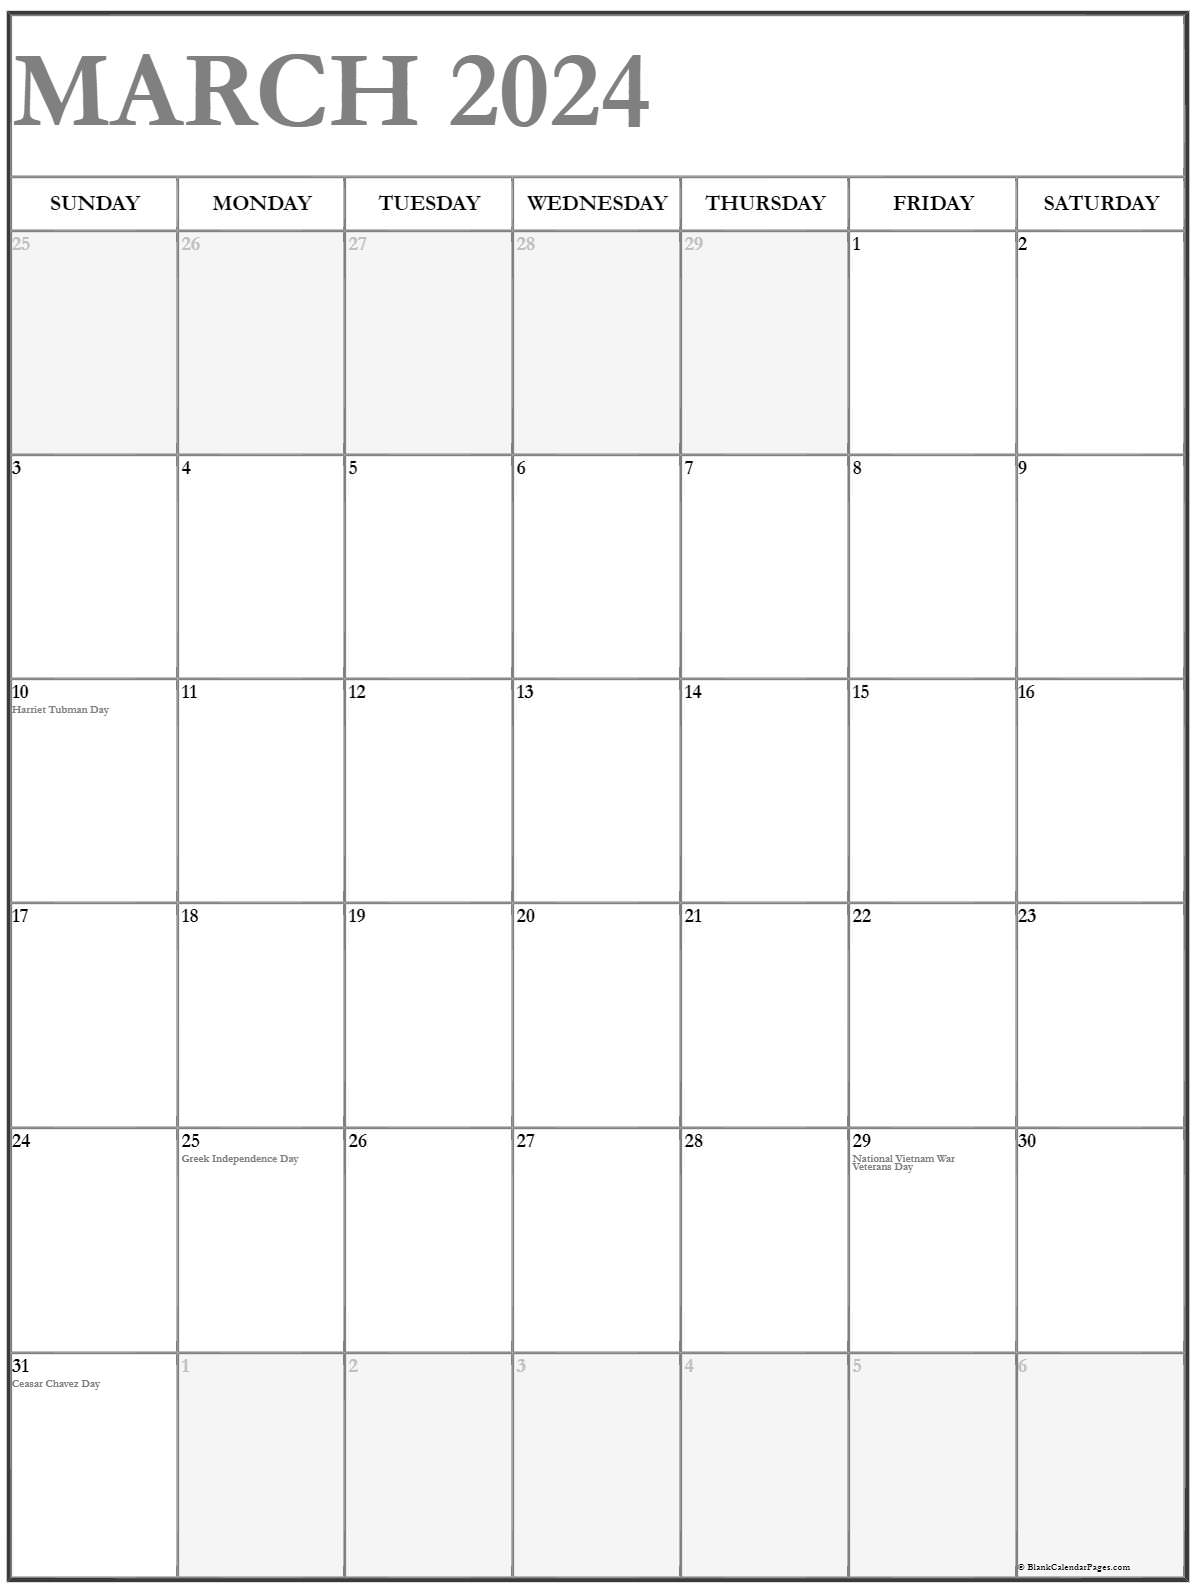 March 2024 Make A Calendar www.vrogue.co